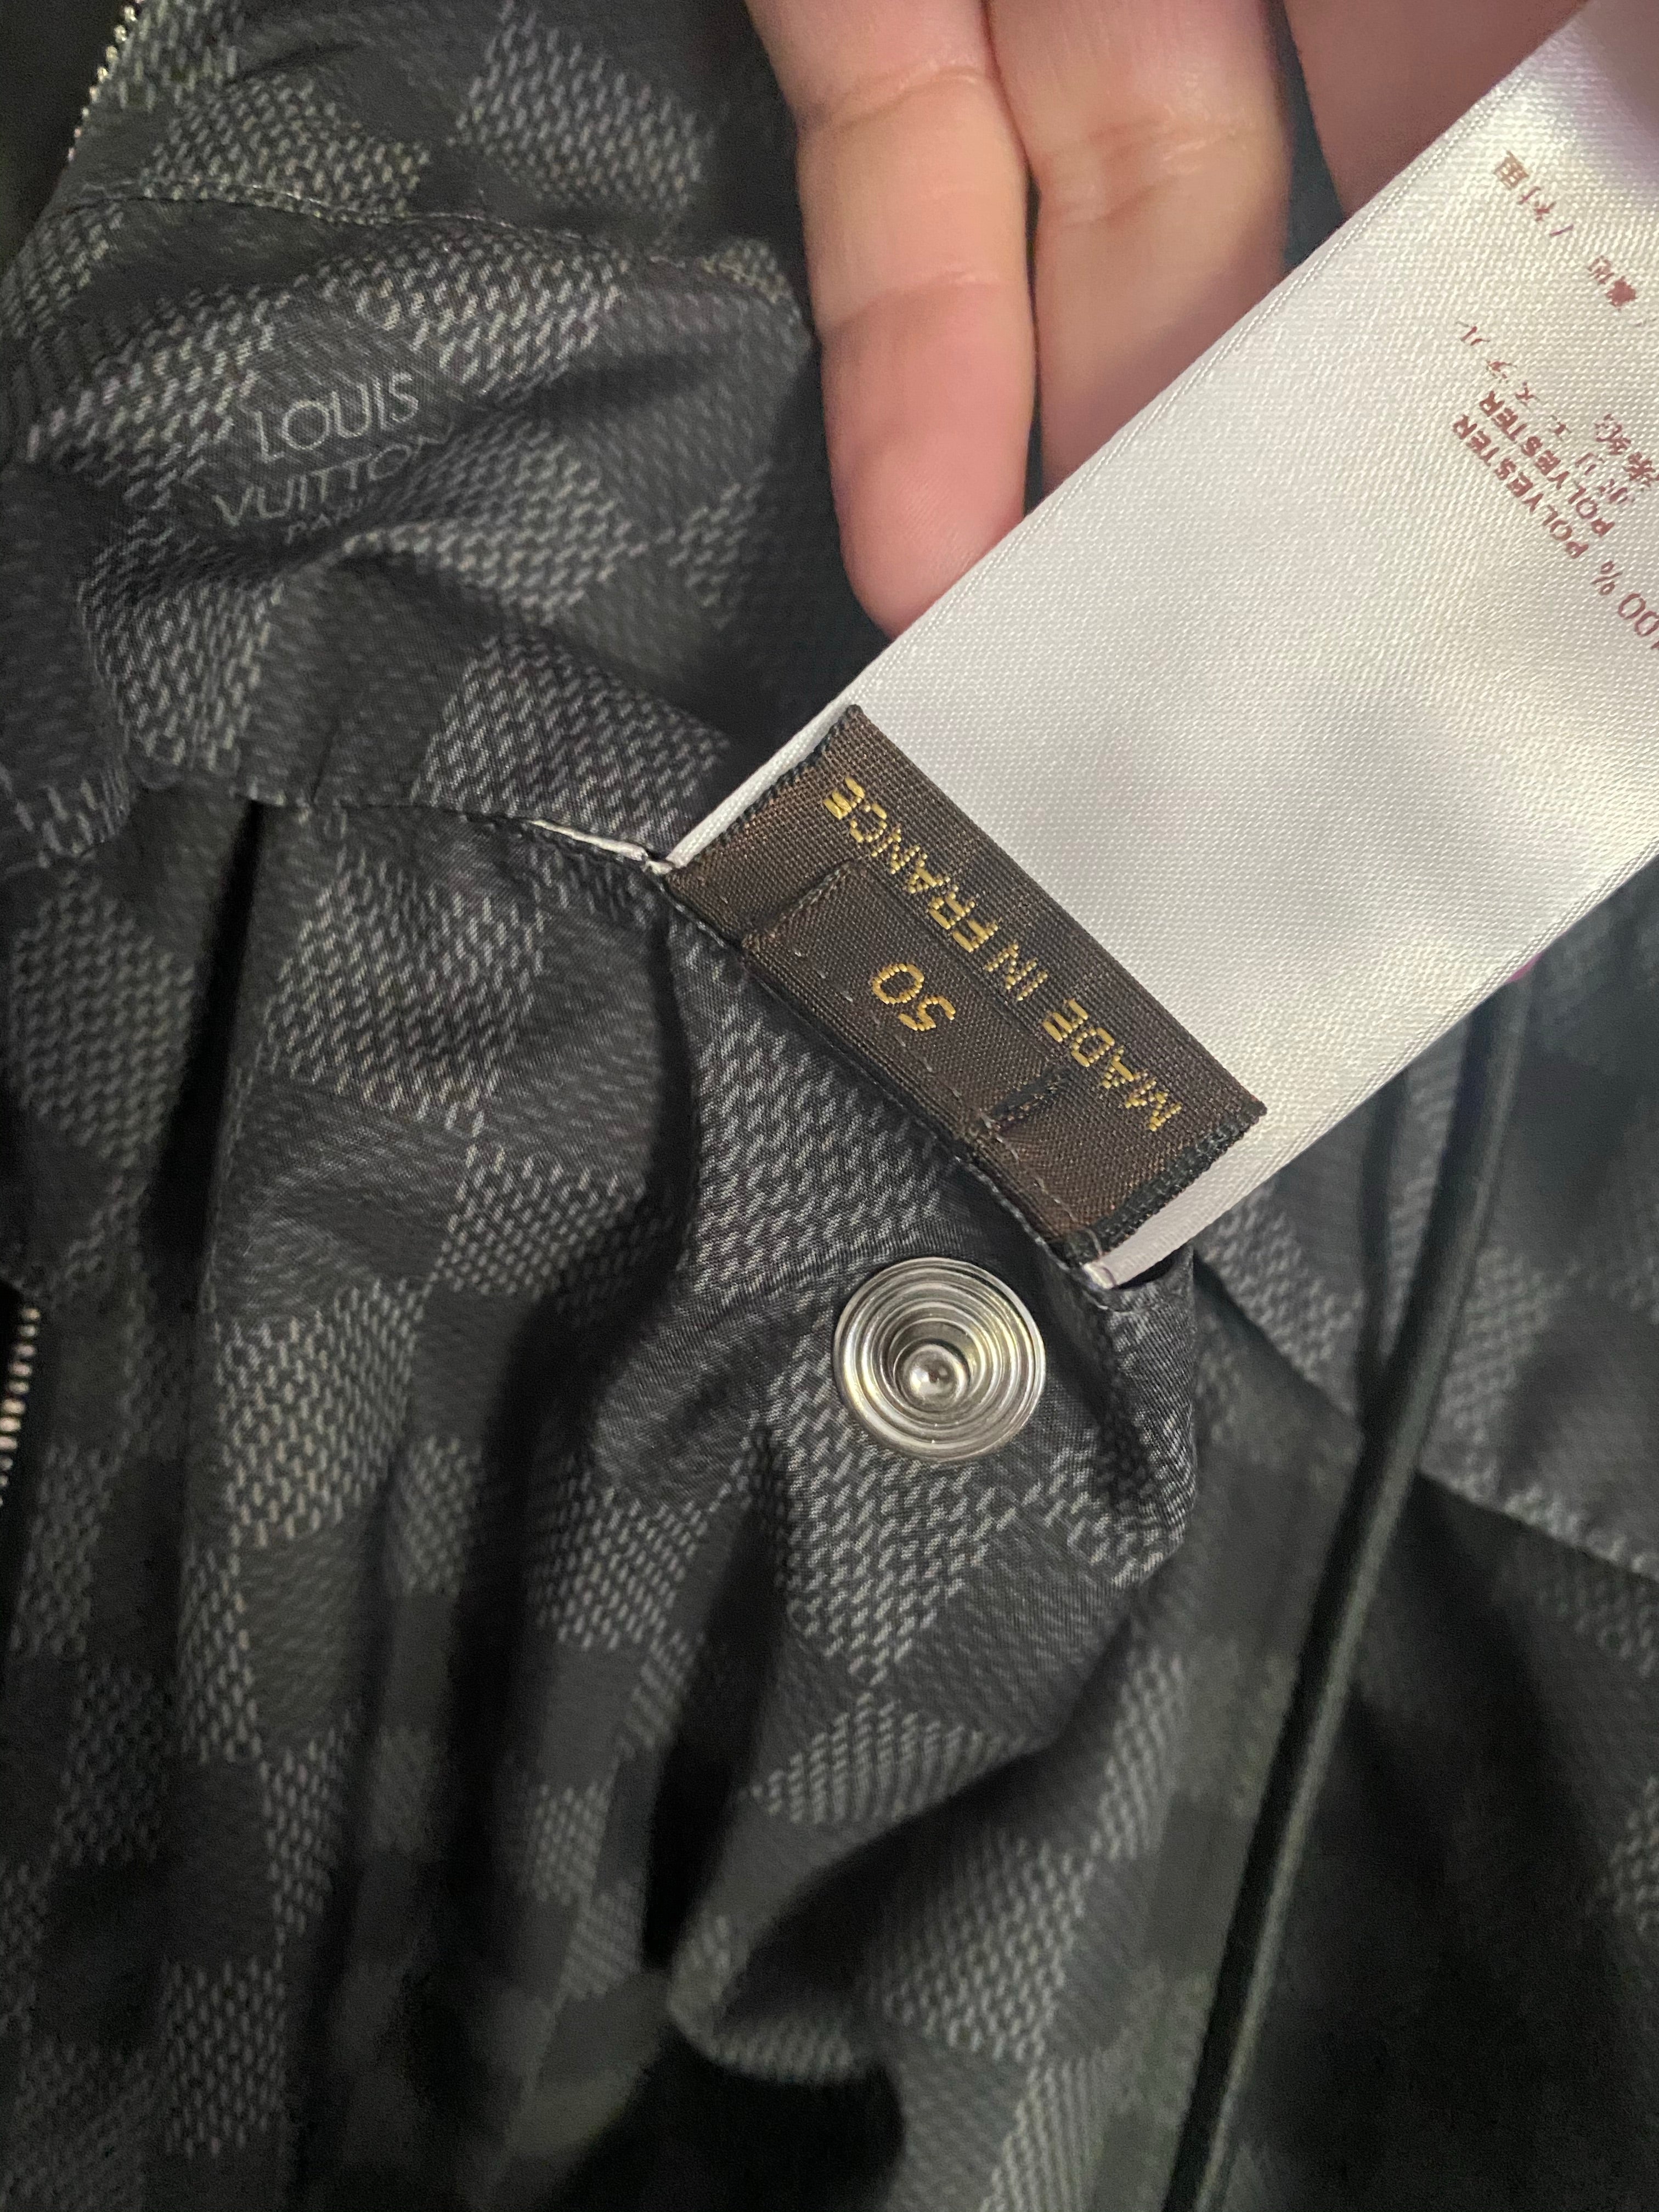 Work from home opportunities - Louis Vuitton Damier MENS jacket XL